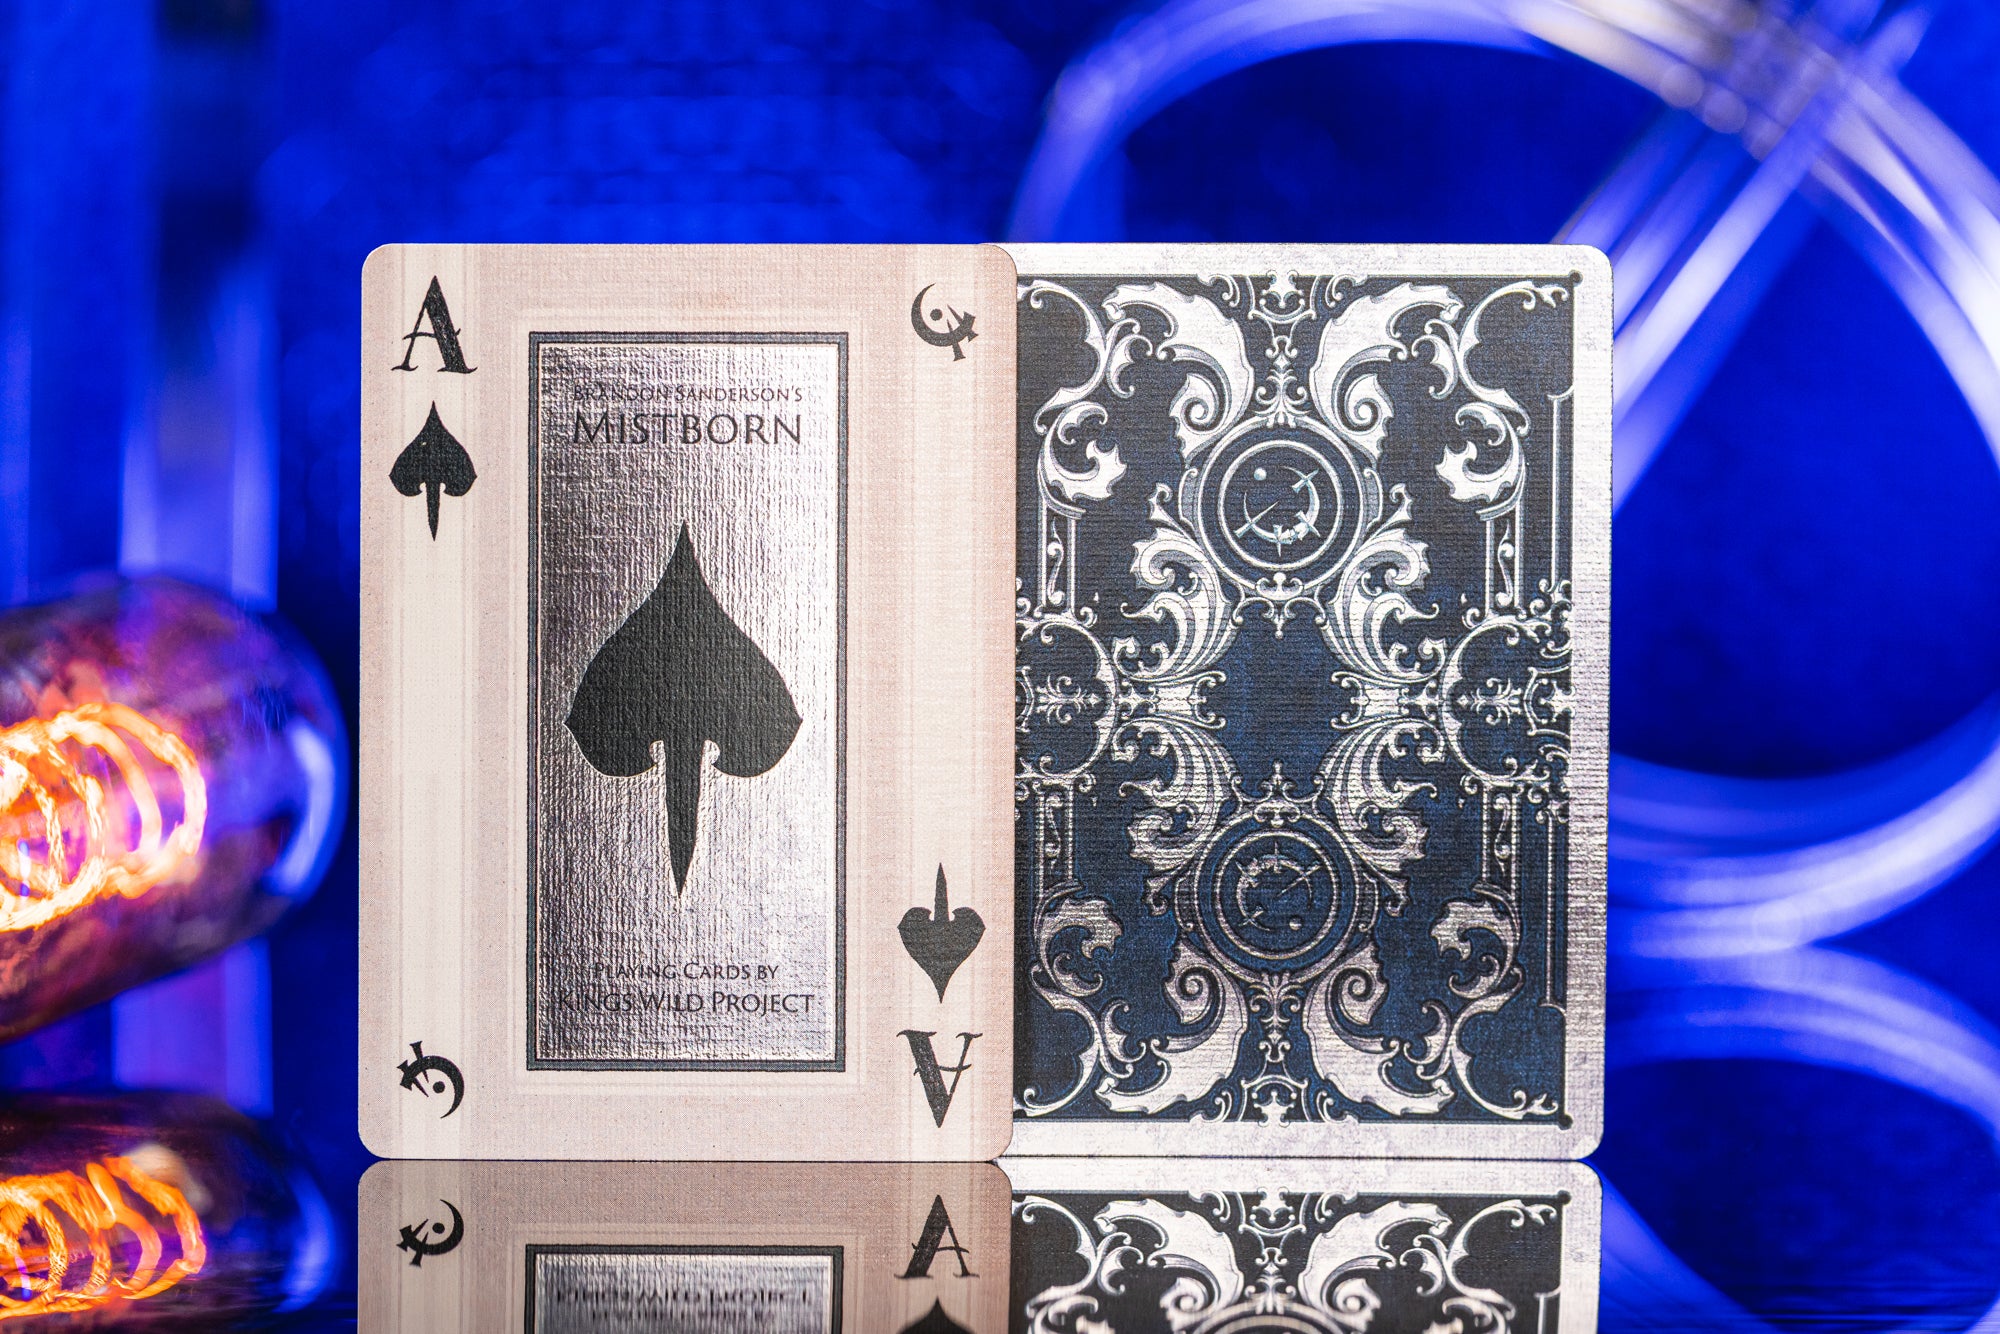 Mistborn - Literature Themed Luxury Playing Cards - Brandon Sanderson